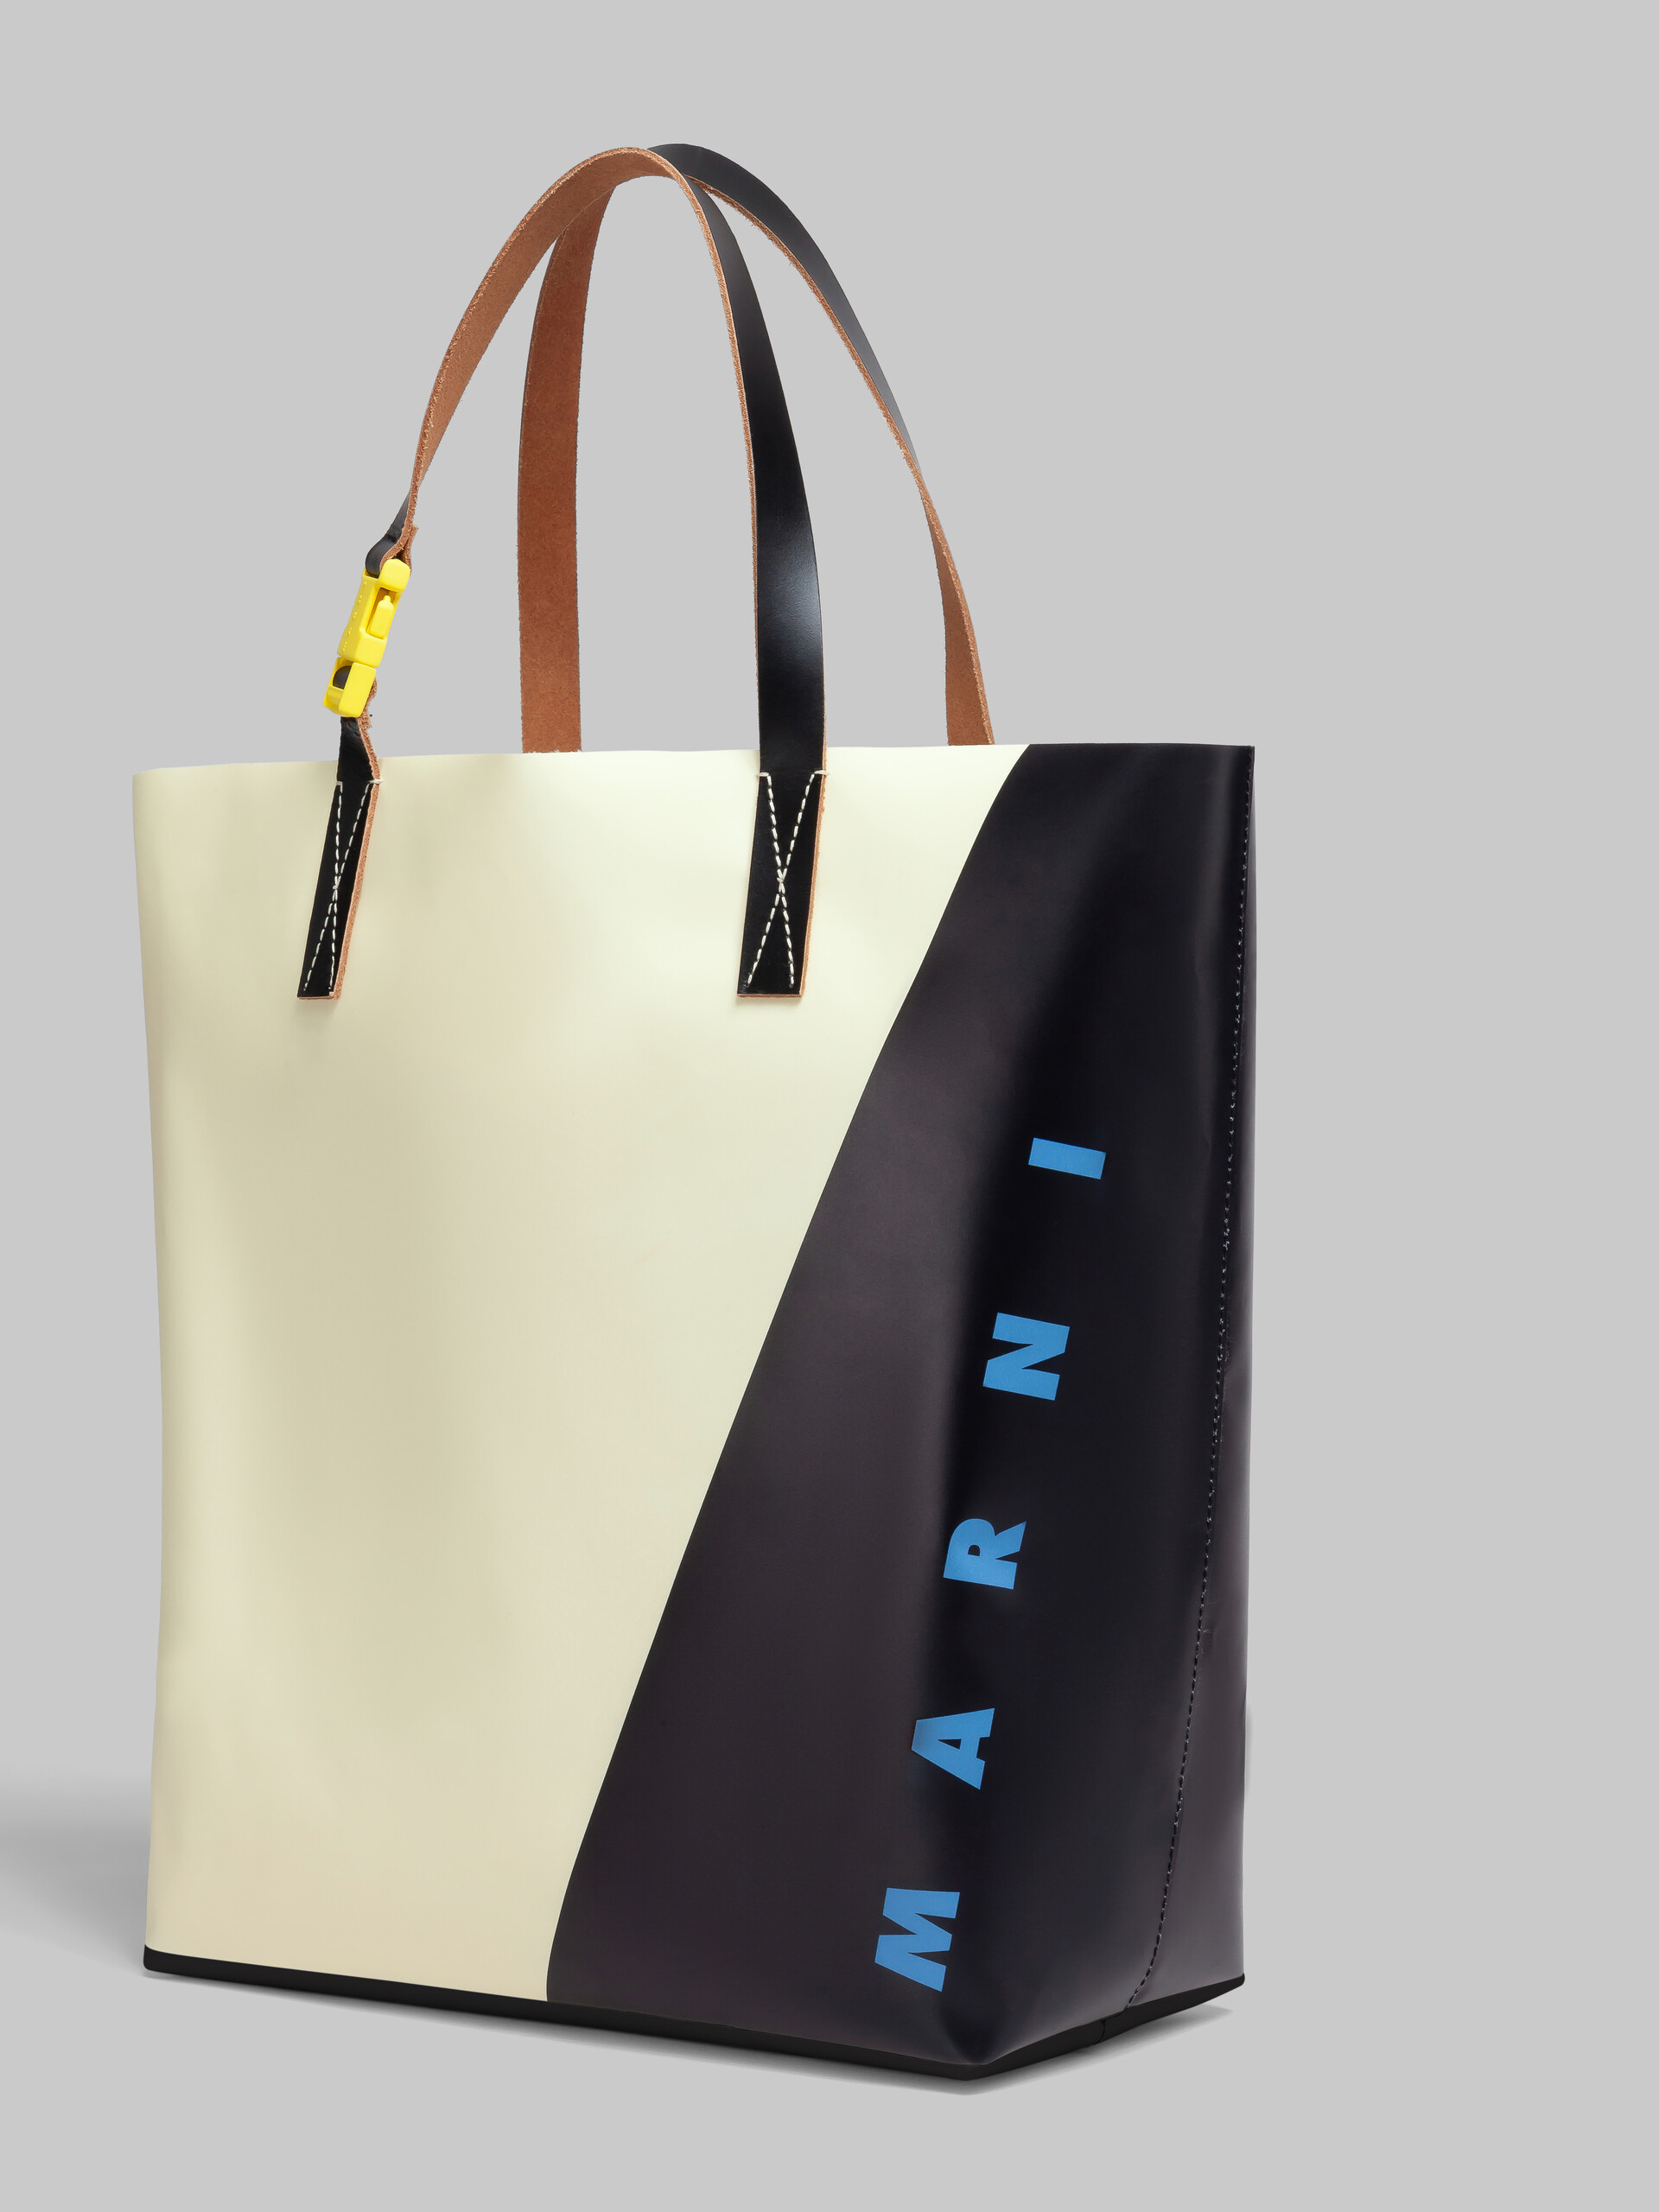 Tribeca Shopping Bag bianca e nera con etichetta Marni - Borse shopping - Image 5